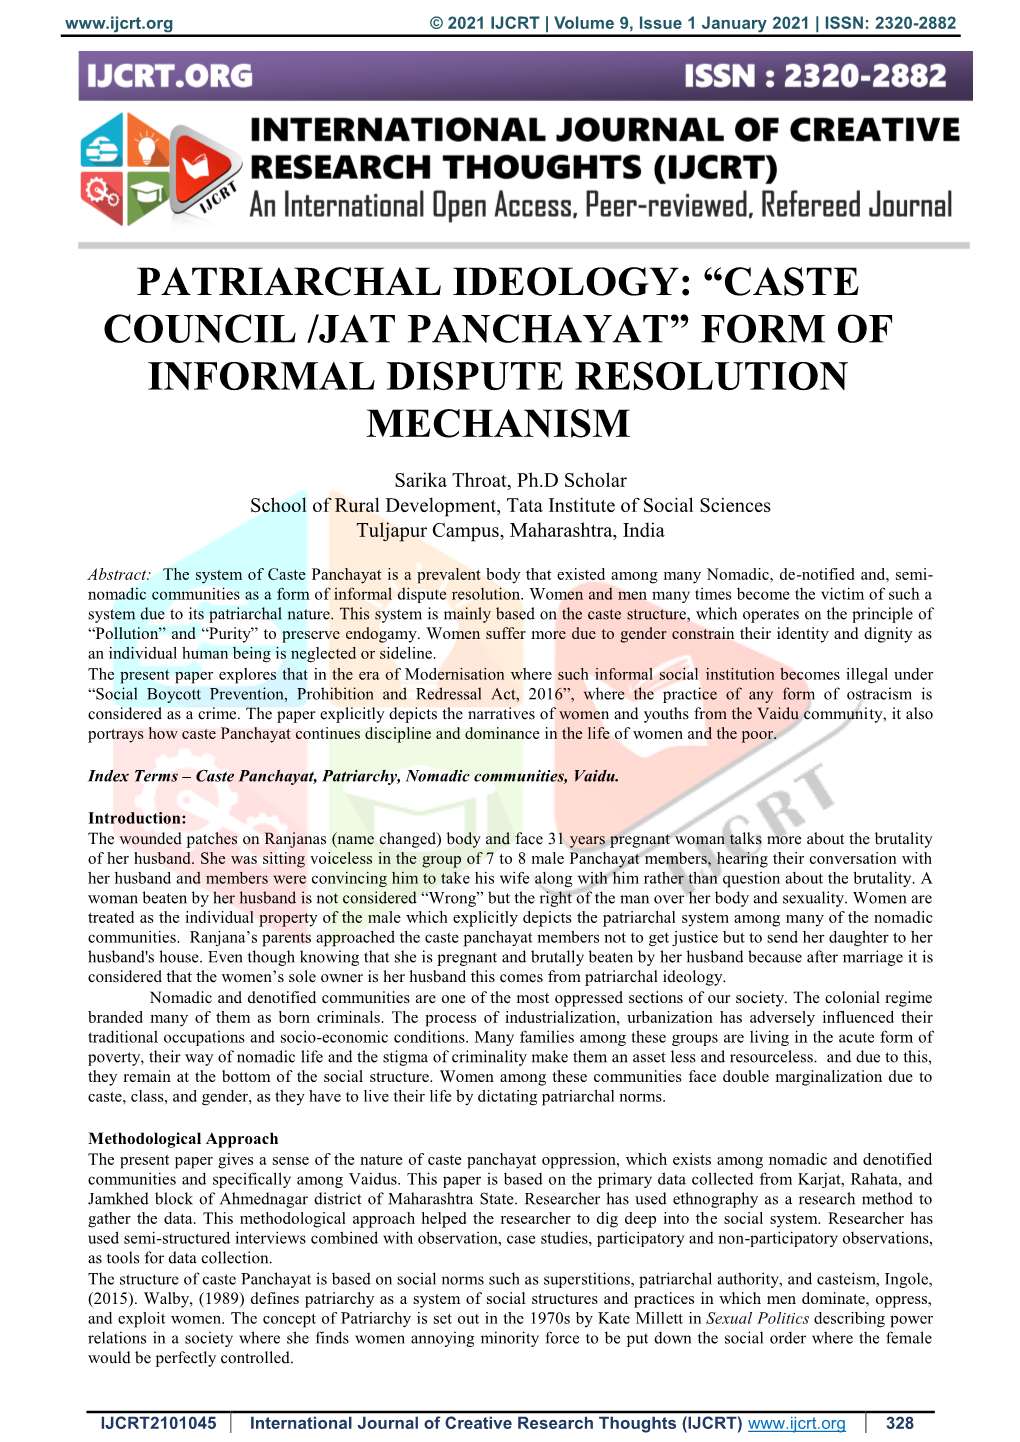 “Caste Council /Jat Panchayat” Form of Informal Dispute Resolution Mechanism